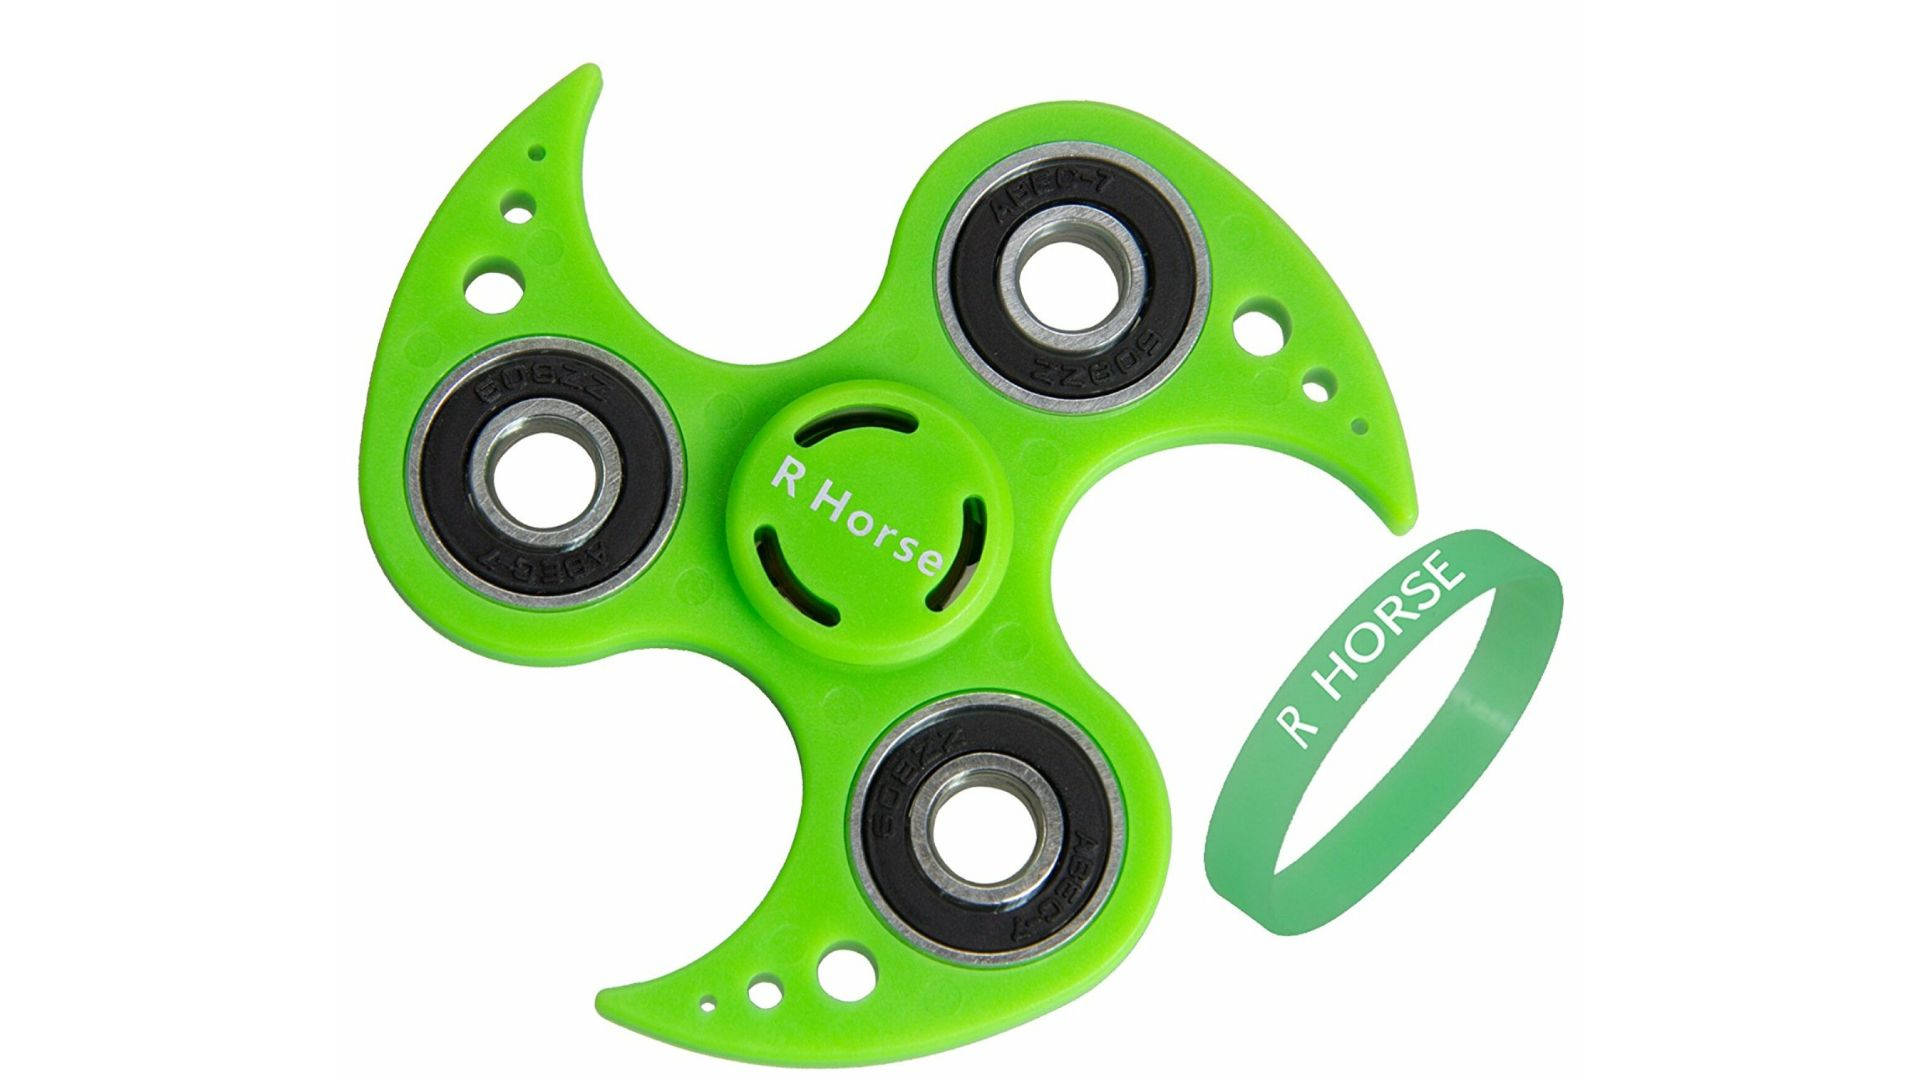 R. Horse Green Fidget Toy